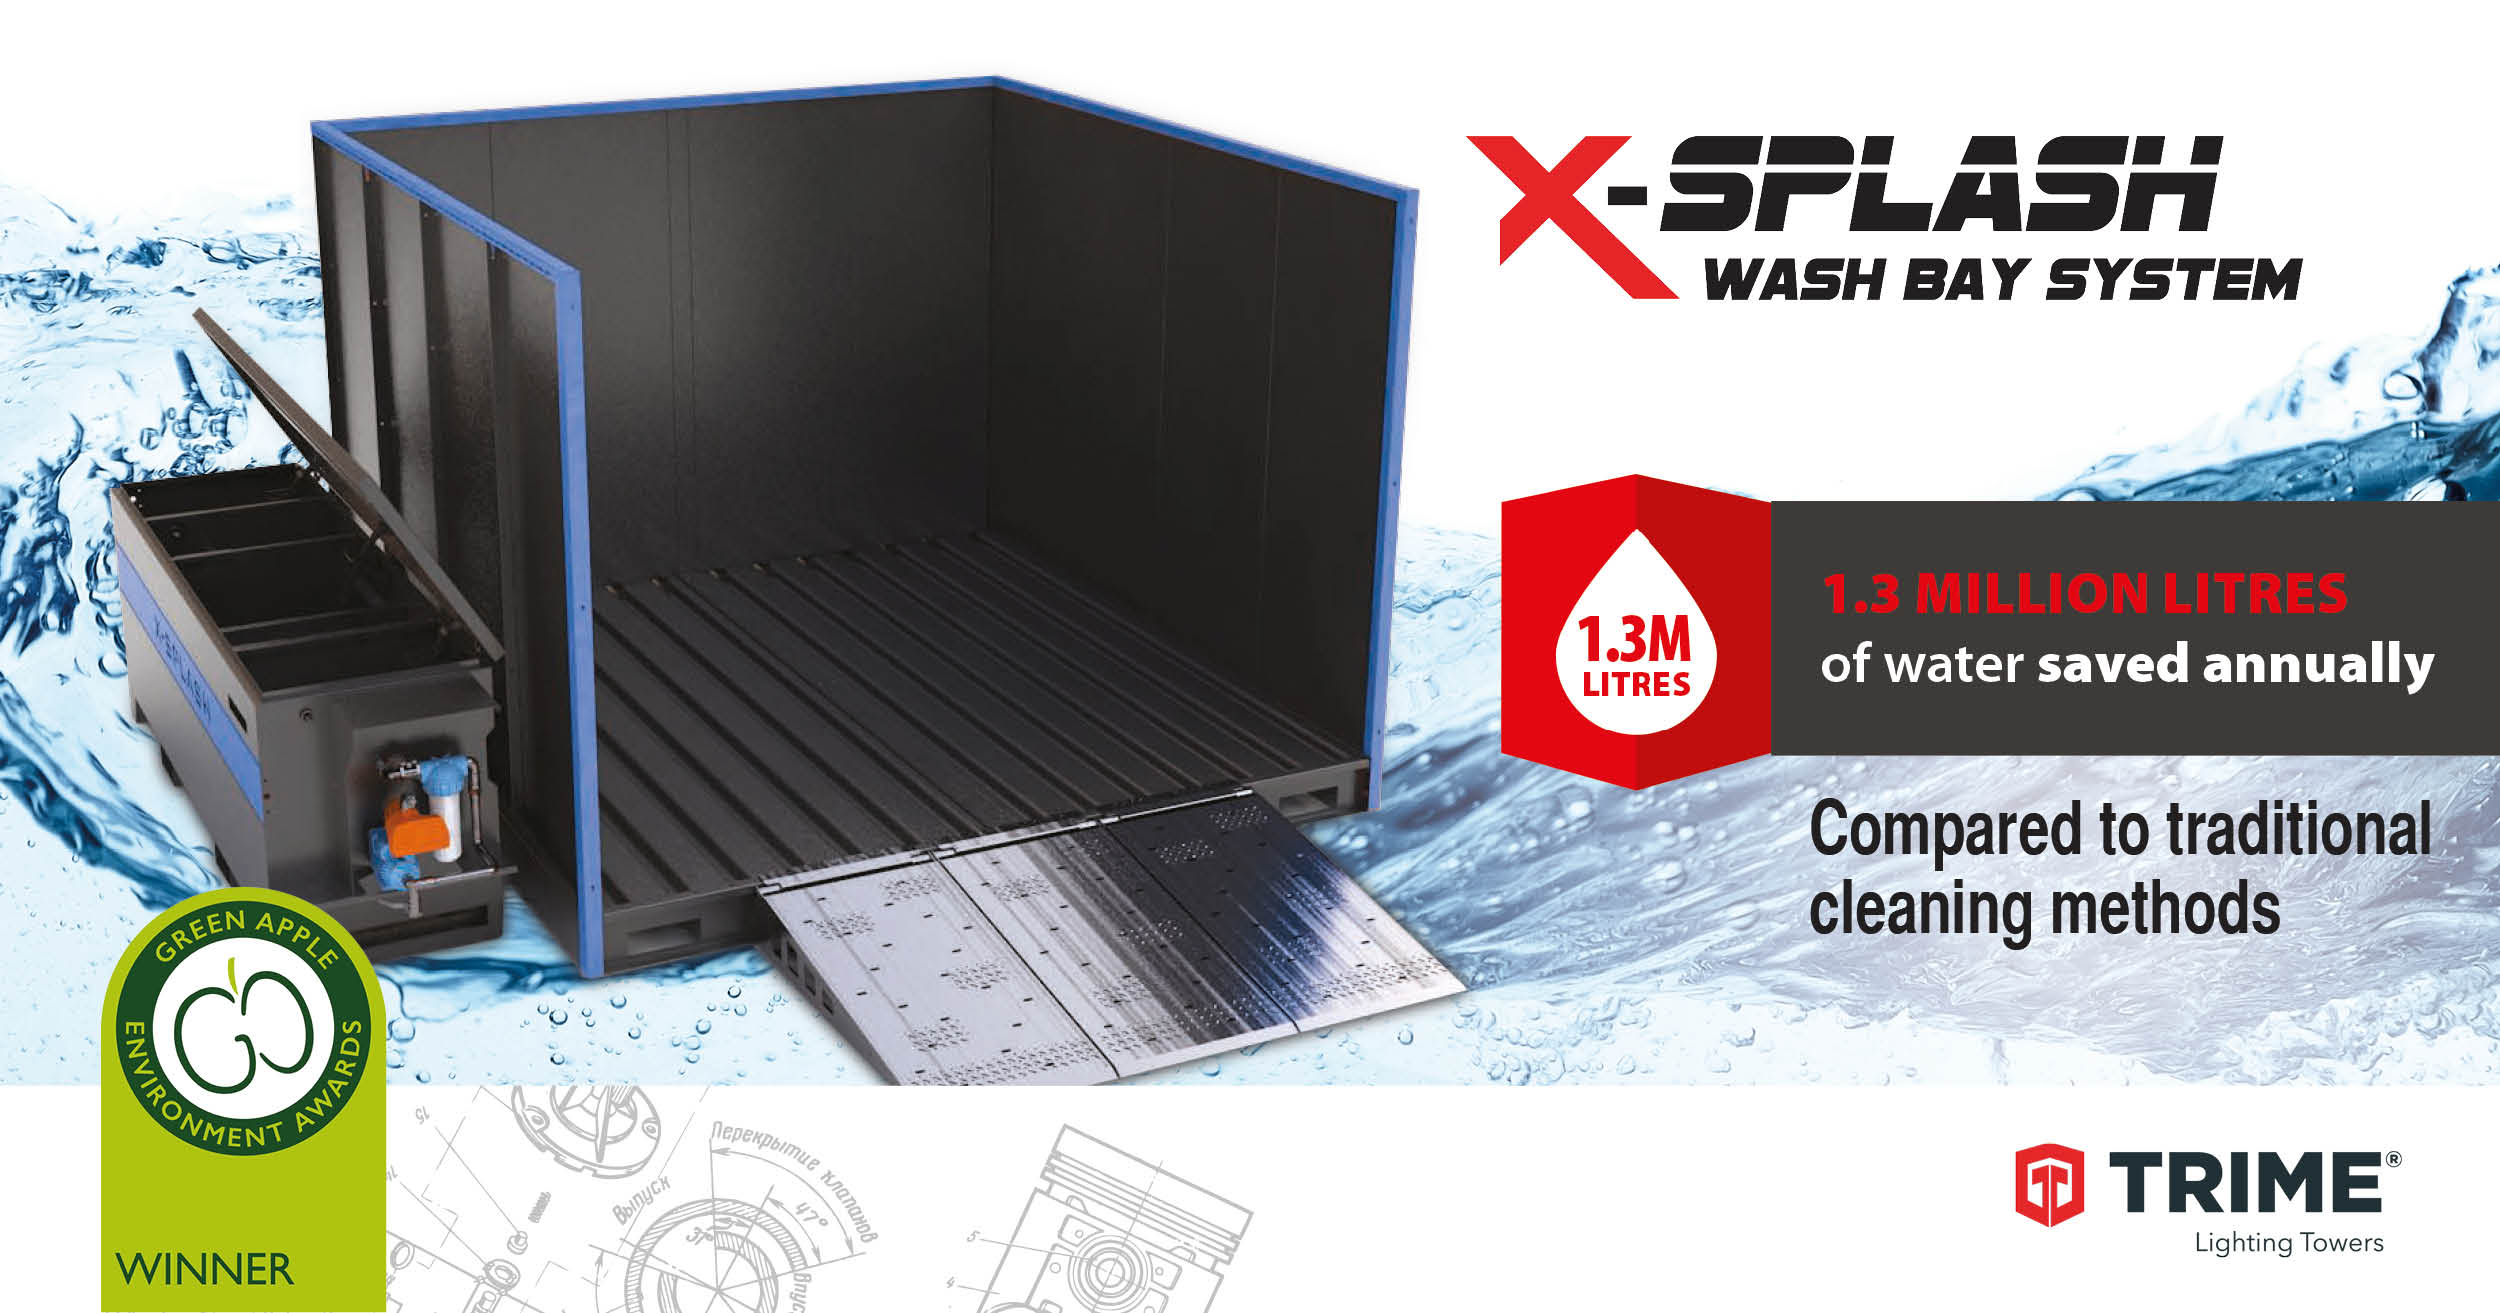 The X-Splash Q&A - Trime's Wash Bay